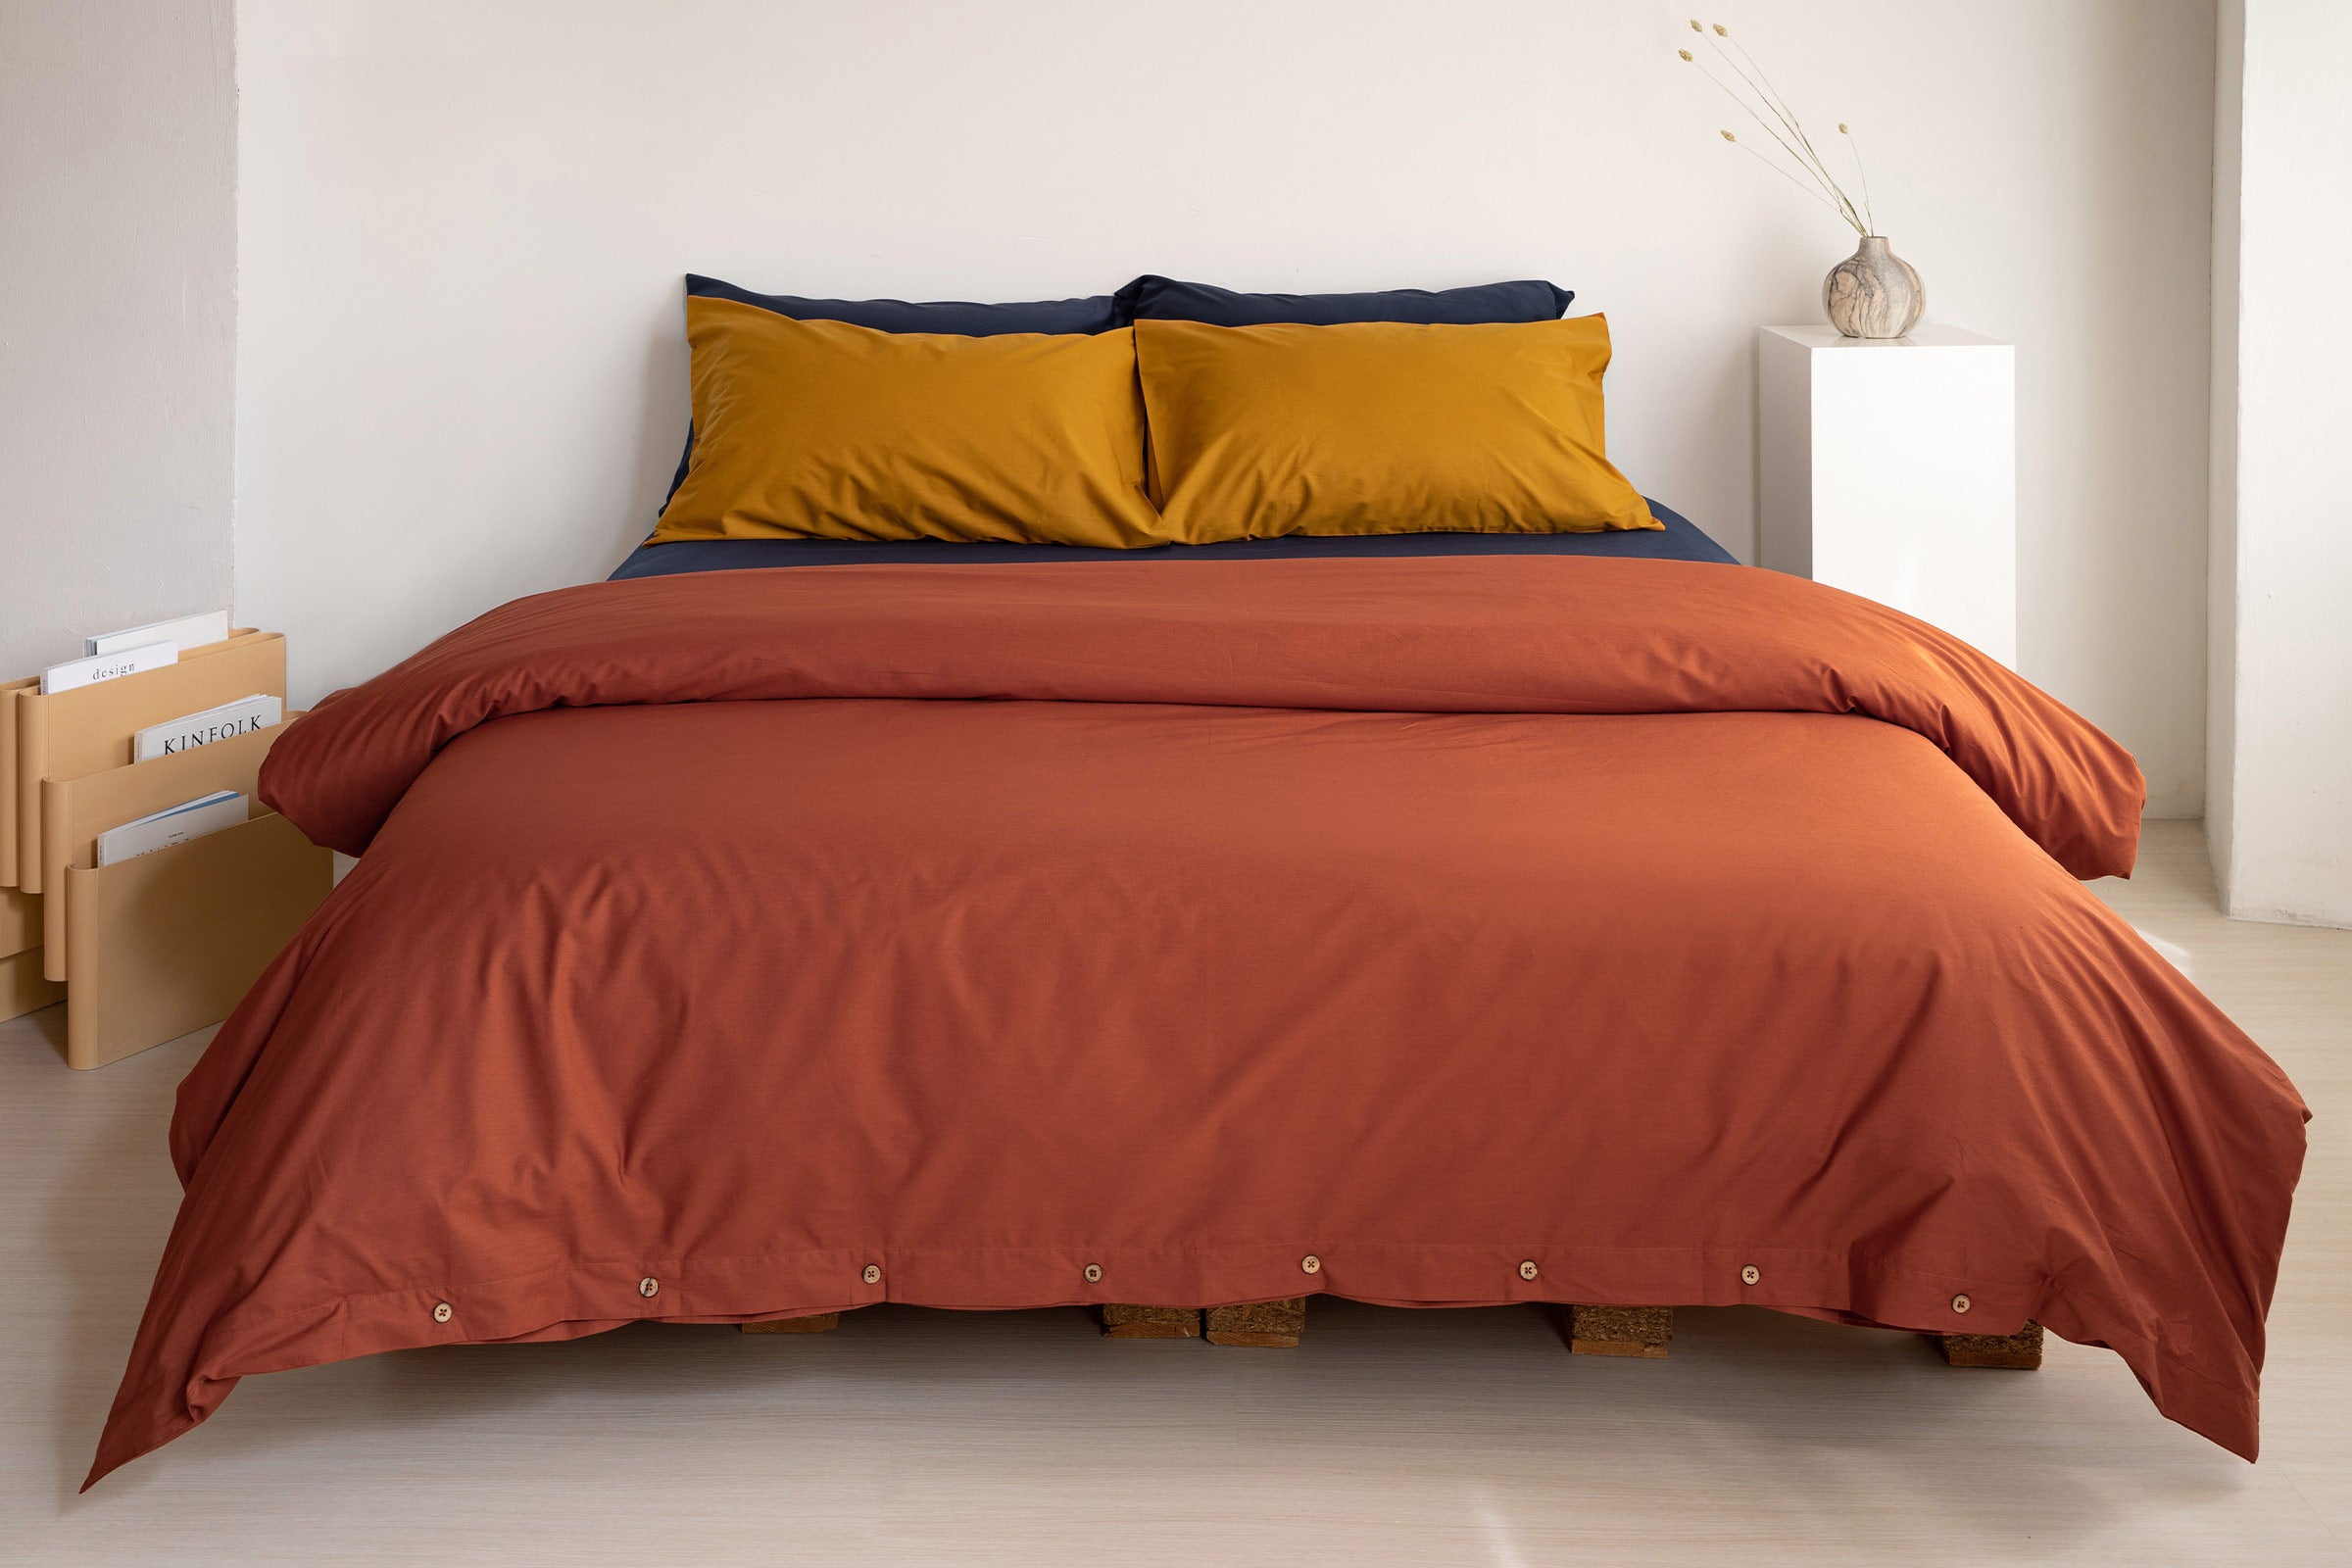 crisp-clay-duvet-cover-mustard-pillowcase-pair-classic-navy-fitted-sheet-pillowcase-pair-by-sojao.jpg